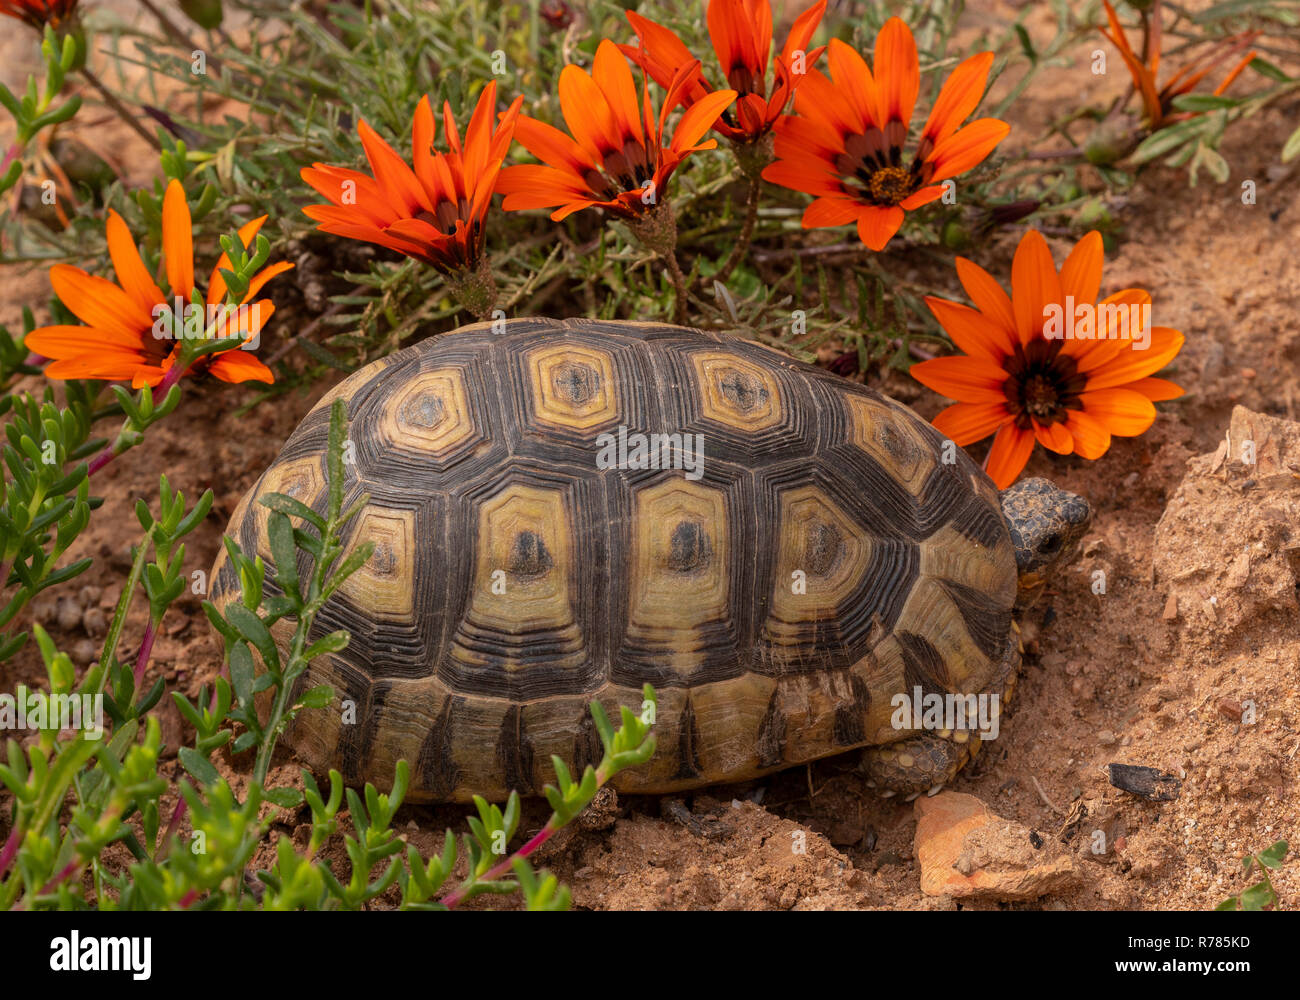 Angulate tortoise, Chersina angulata, among Gazanias; South Africa. Stock Photo